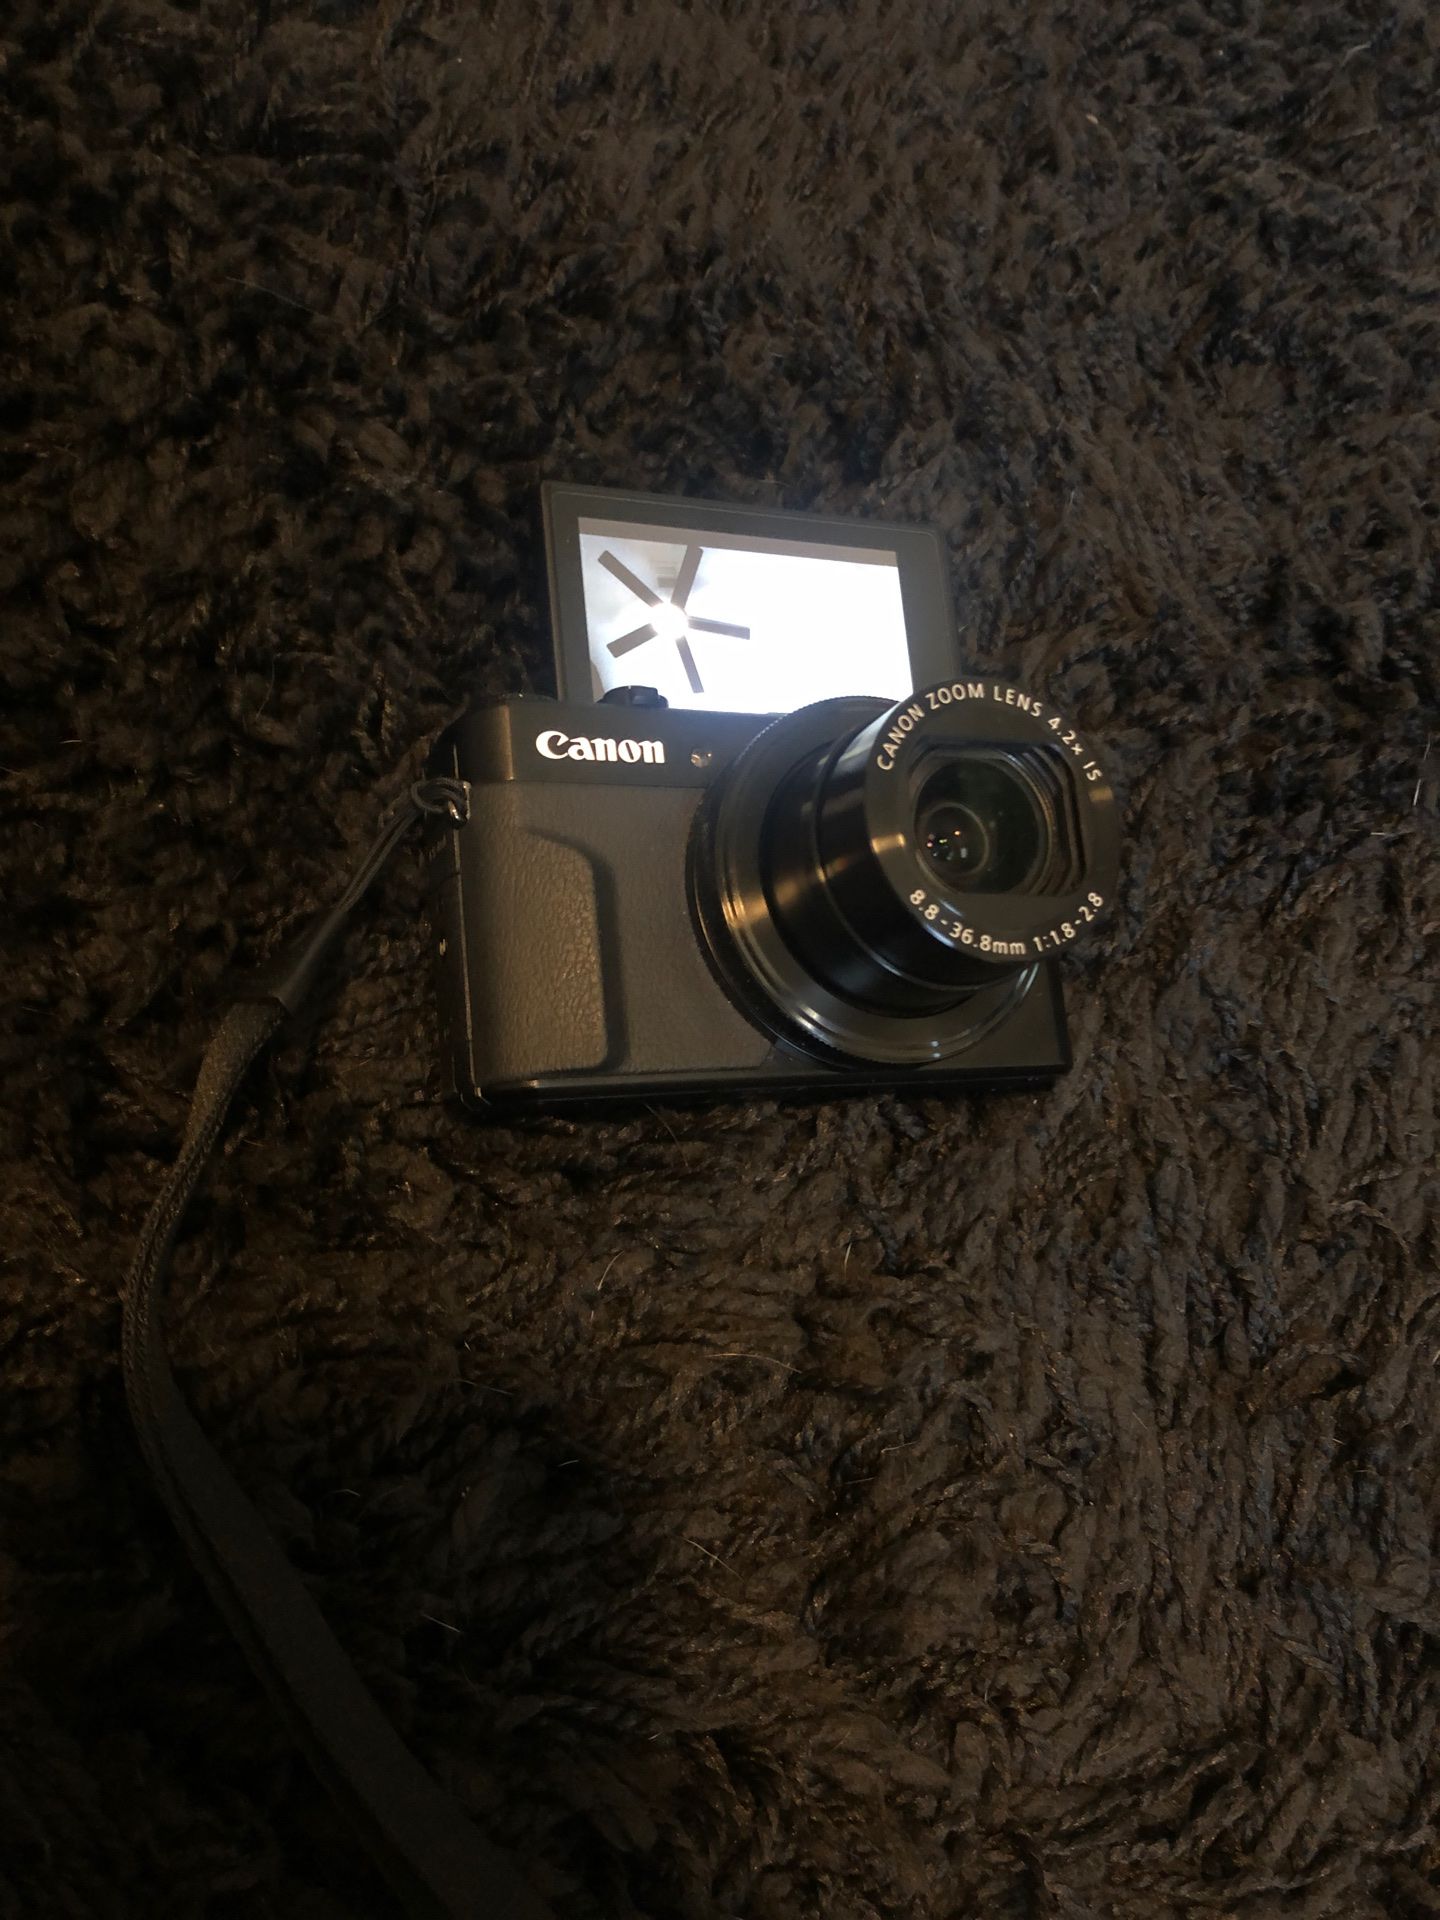 Canon g7x mark ii $400 OBO